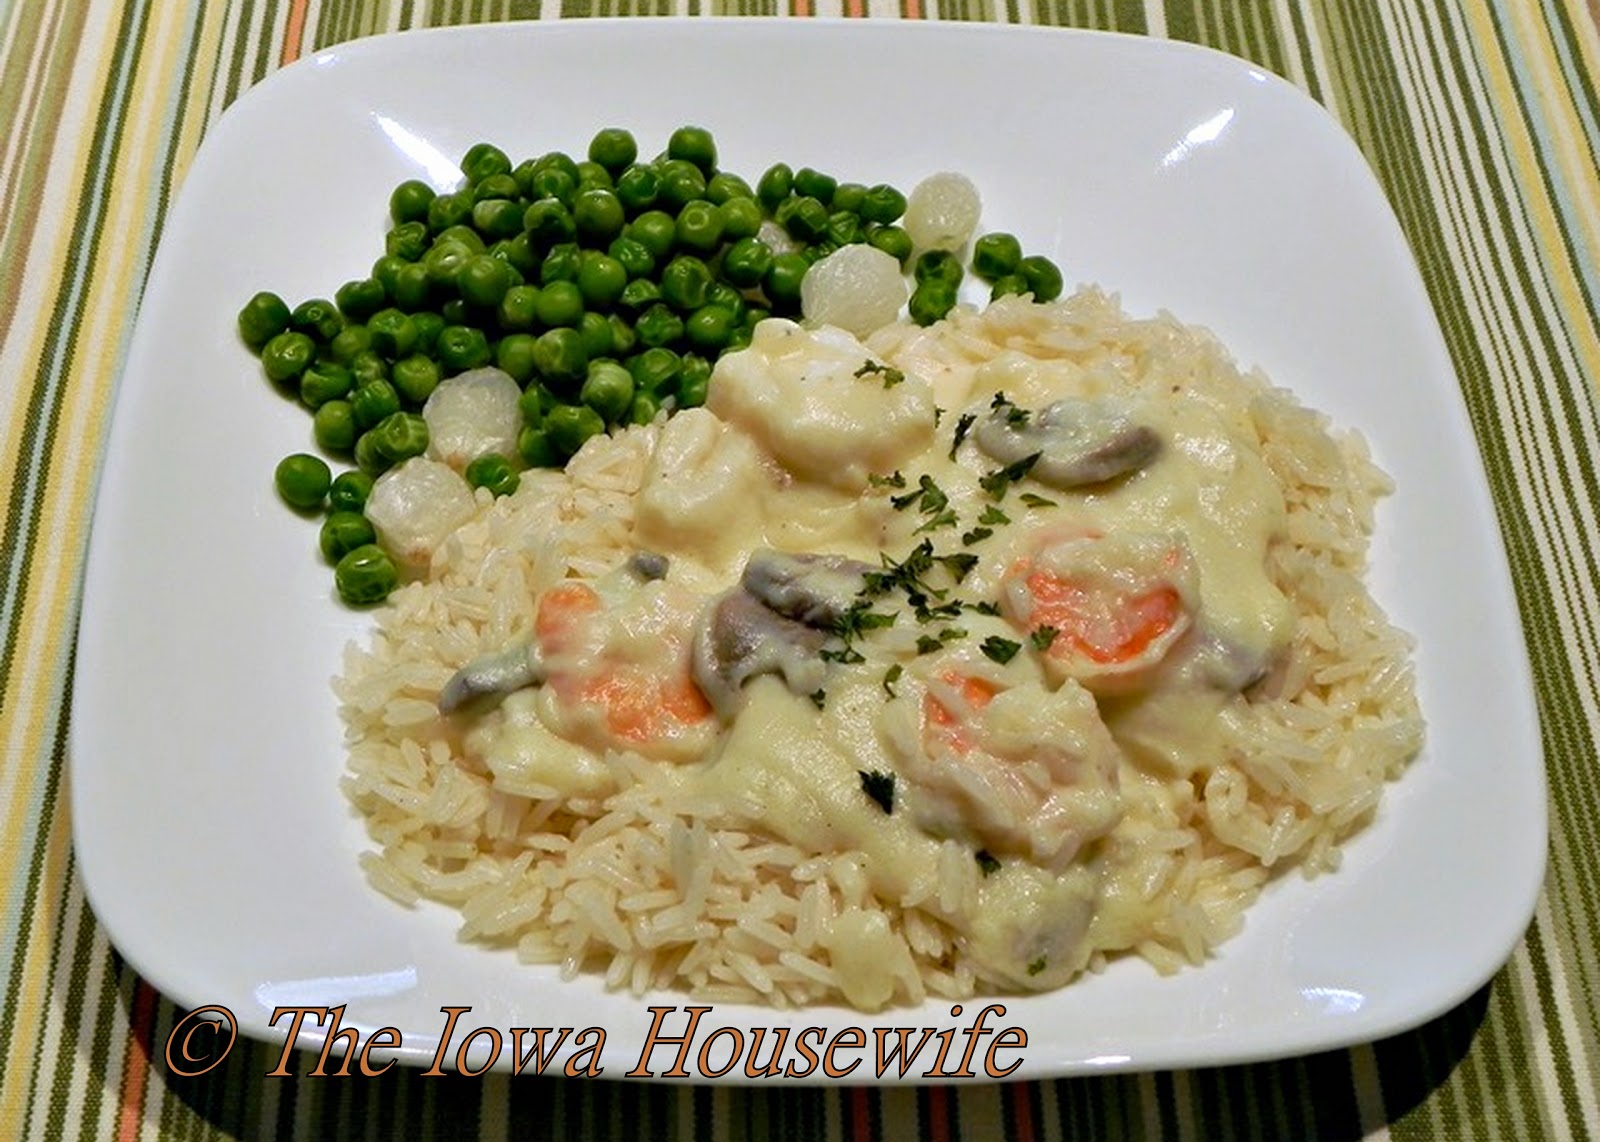 The Iowa Housewife Seafood And Shrimp Newburg,Magnolia Scale